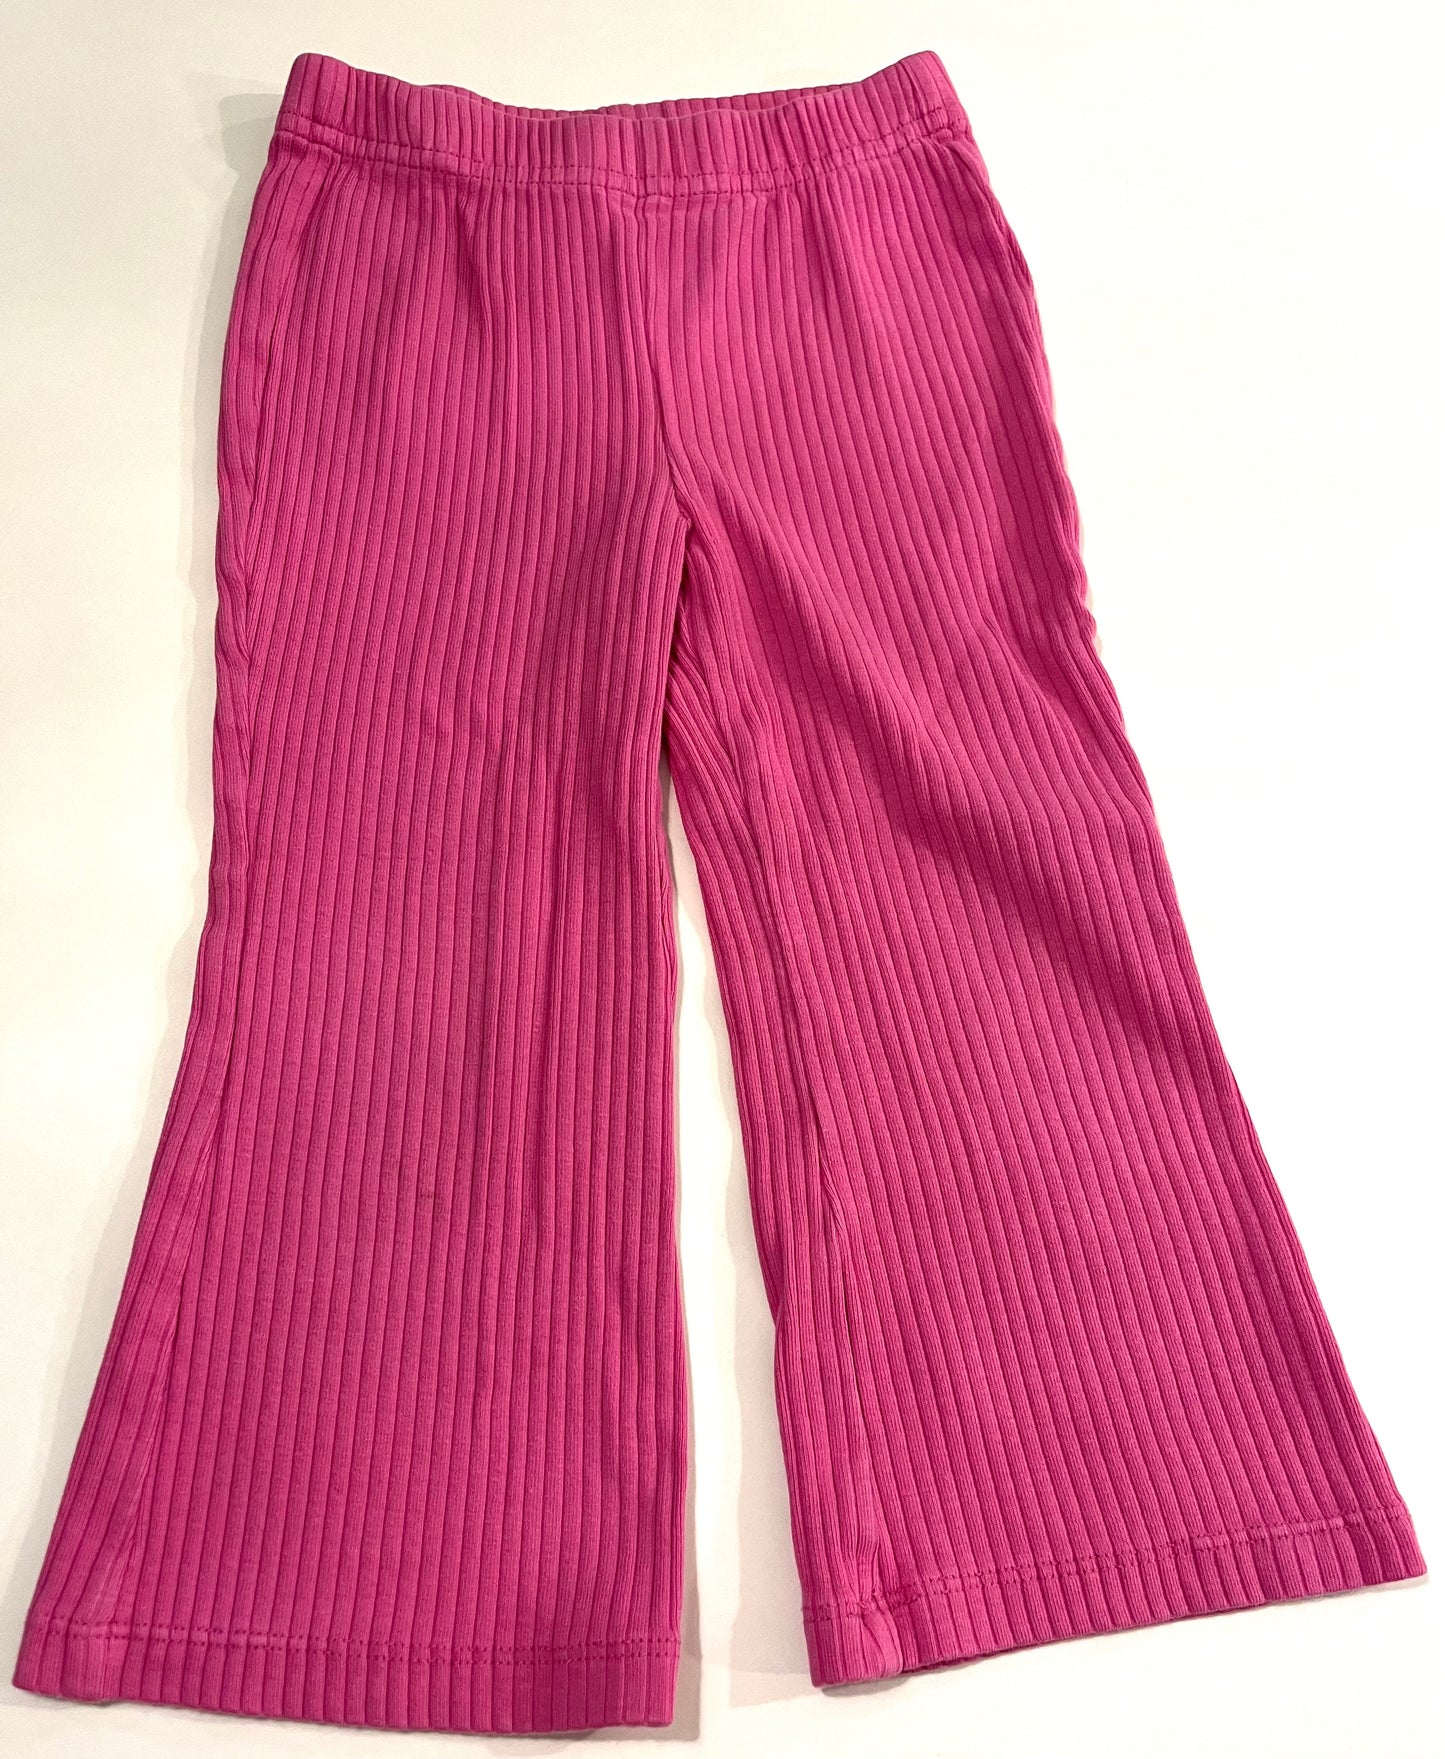 Hanna, Pink Flare Pants, Sz 3